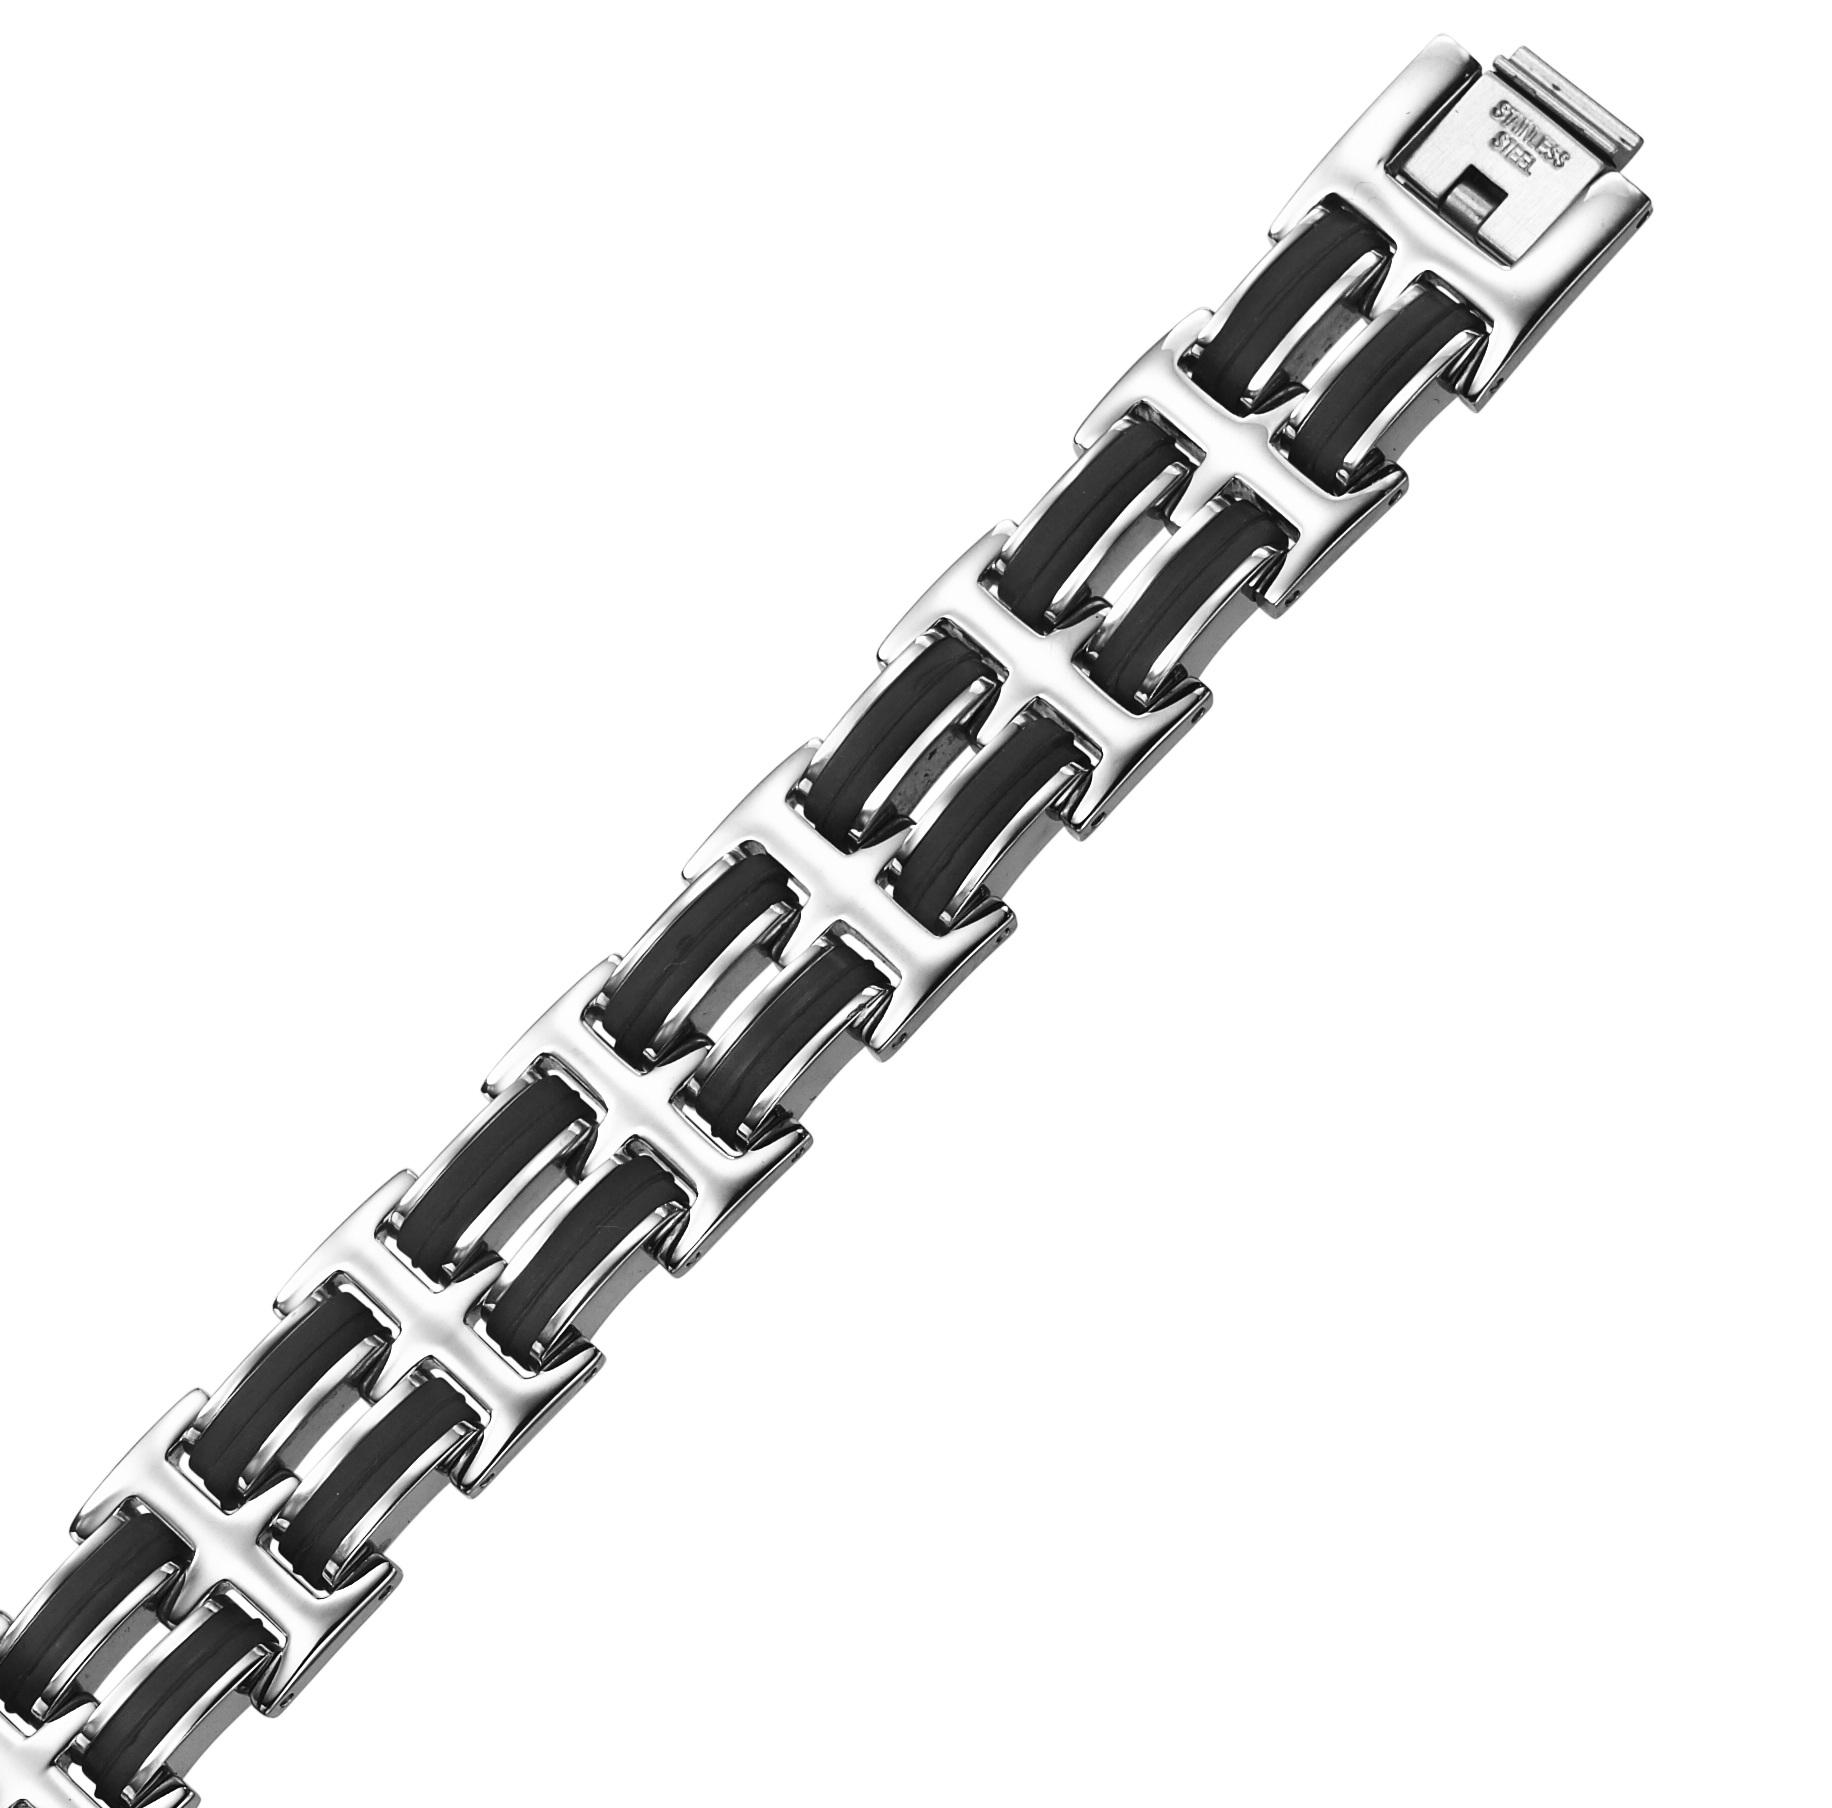 Steel and Rubber Bracelet / AMS1019